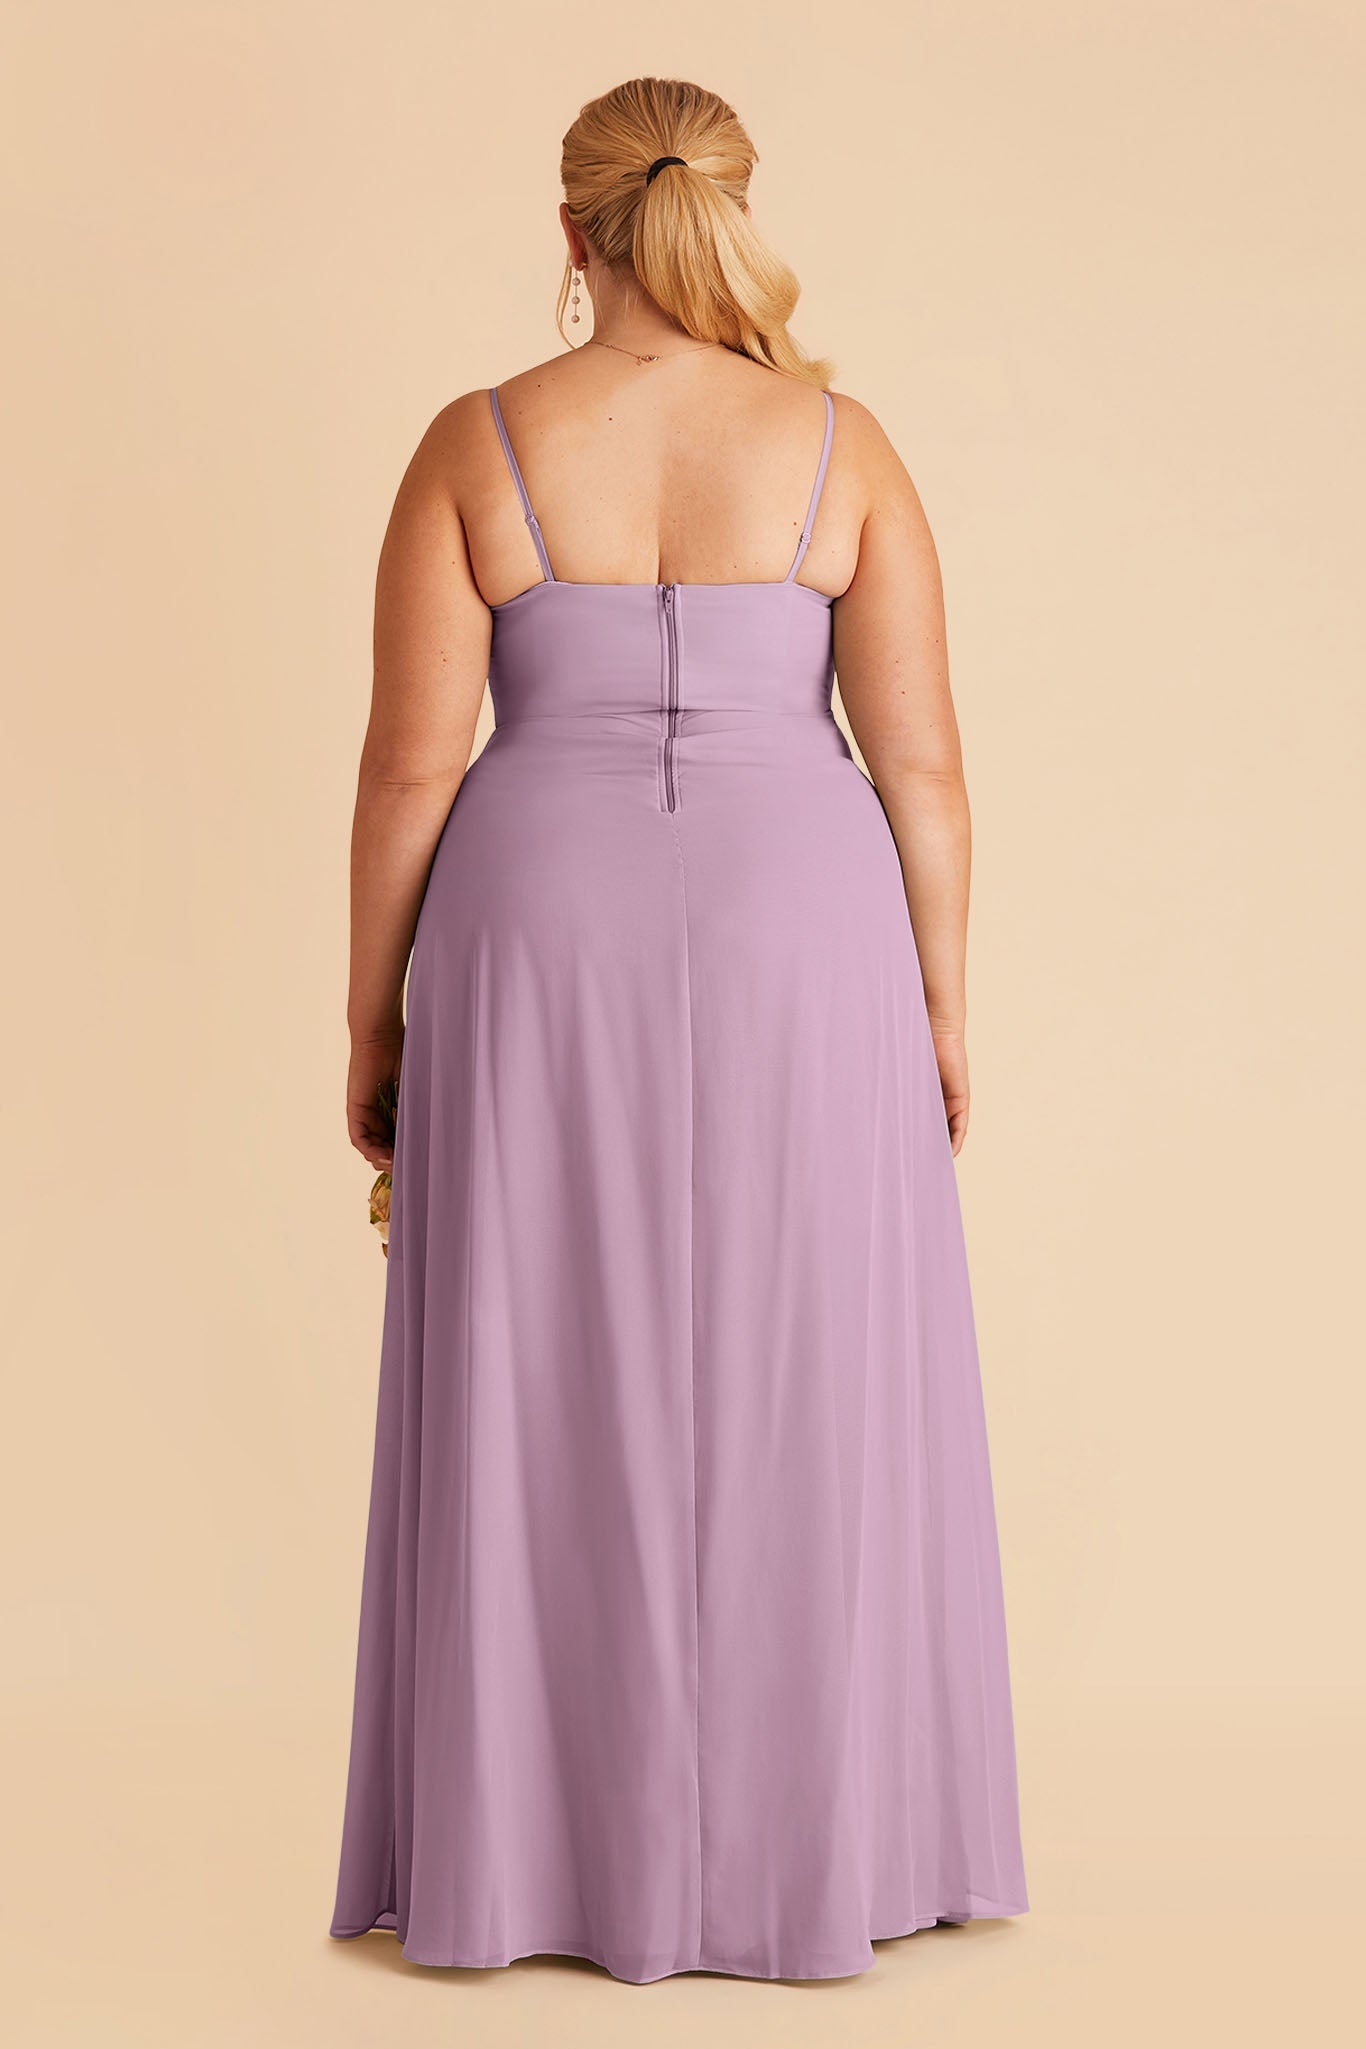 Lavender Chris Convertible Chiffon Dress by Birdy Grey